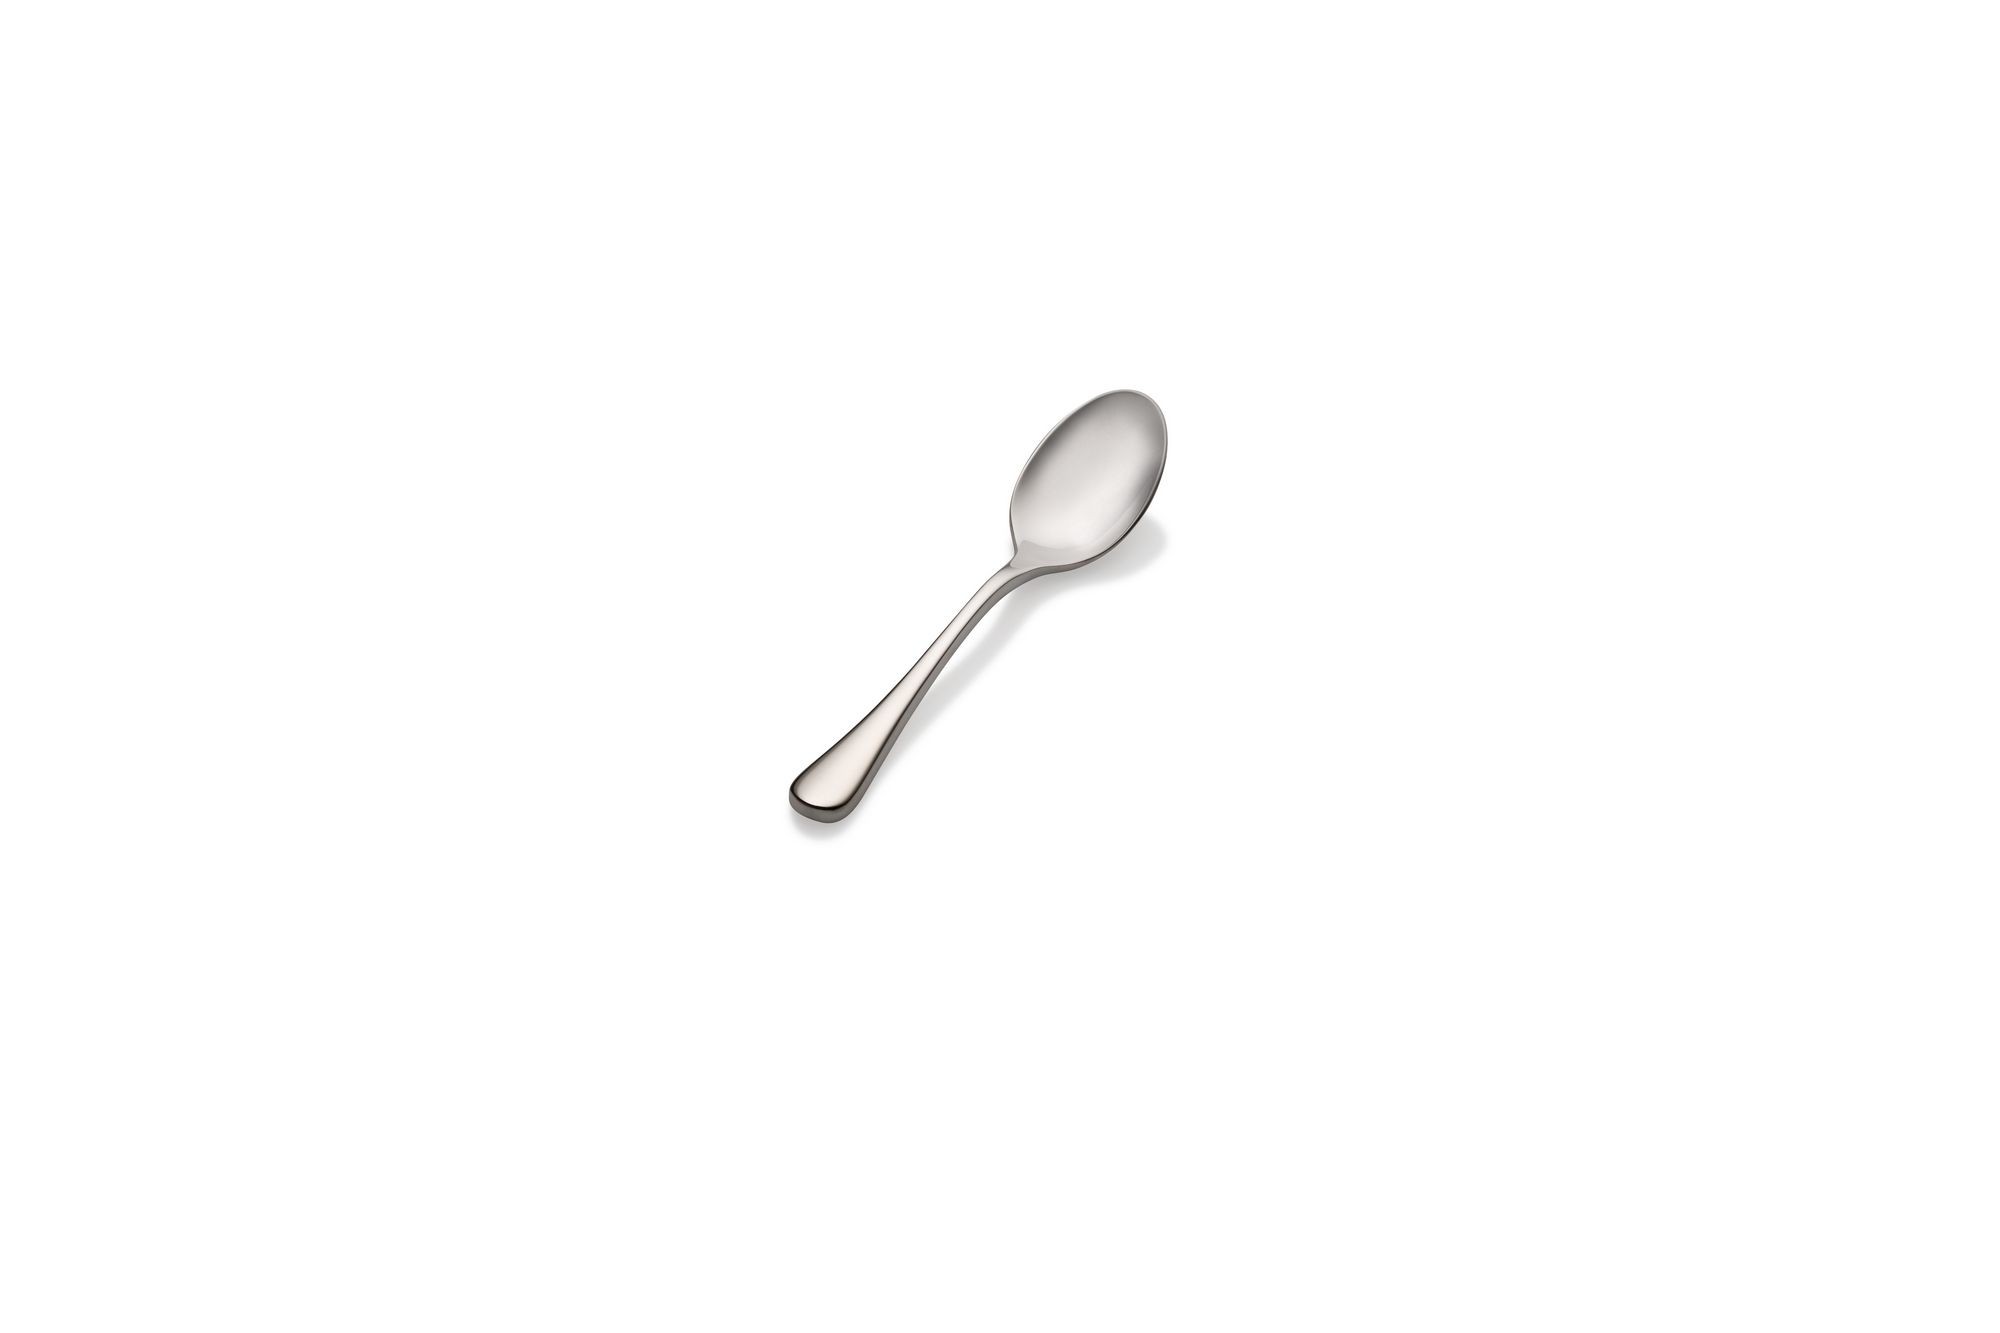 Bon Chef S4016 Como 18/8 Stainless Steel Demitasse Spoon